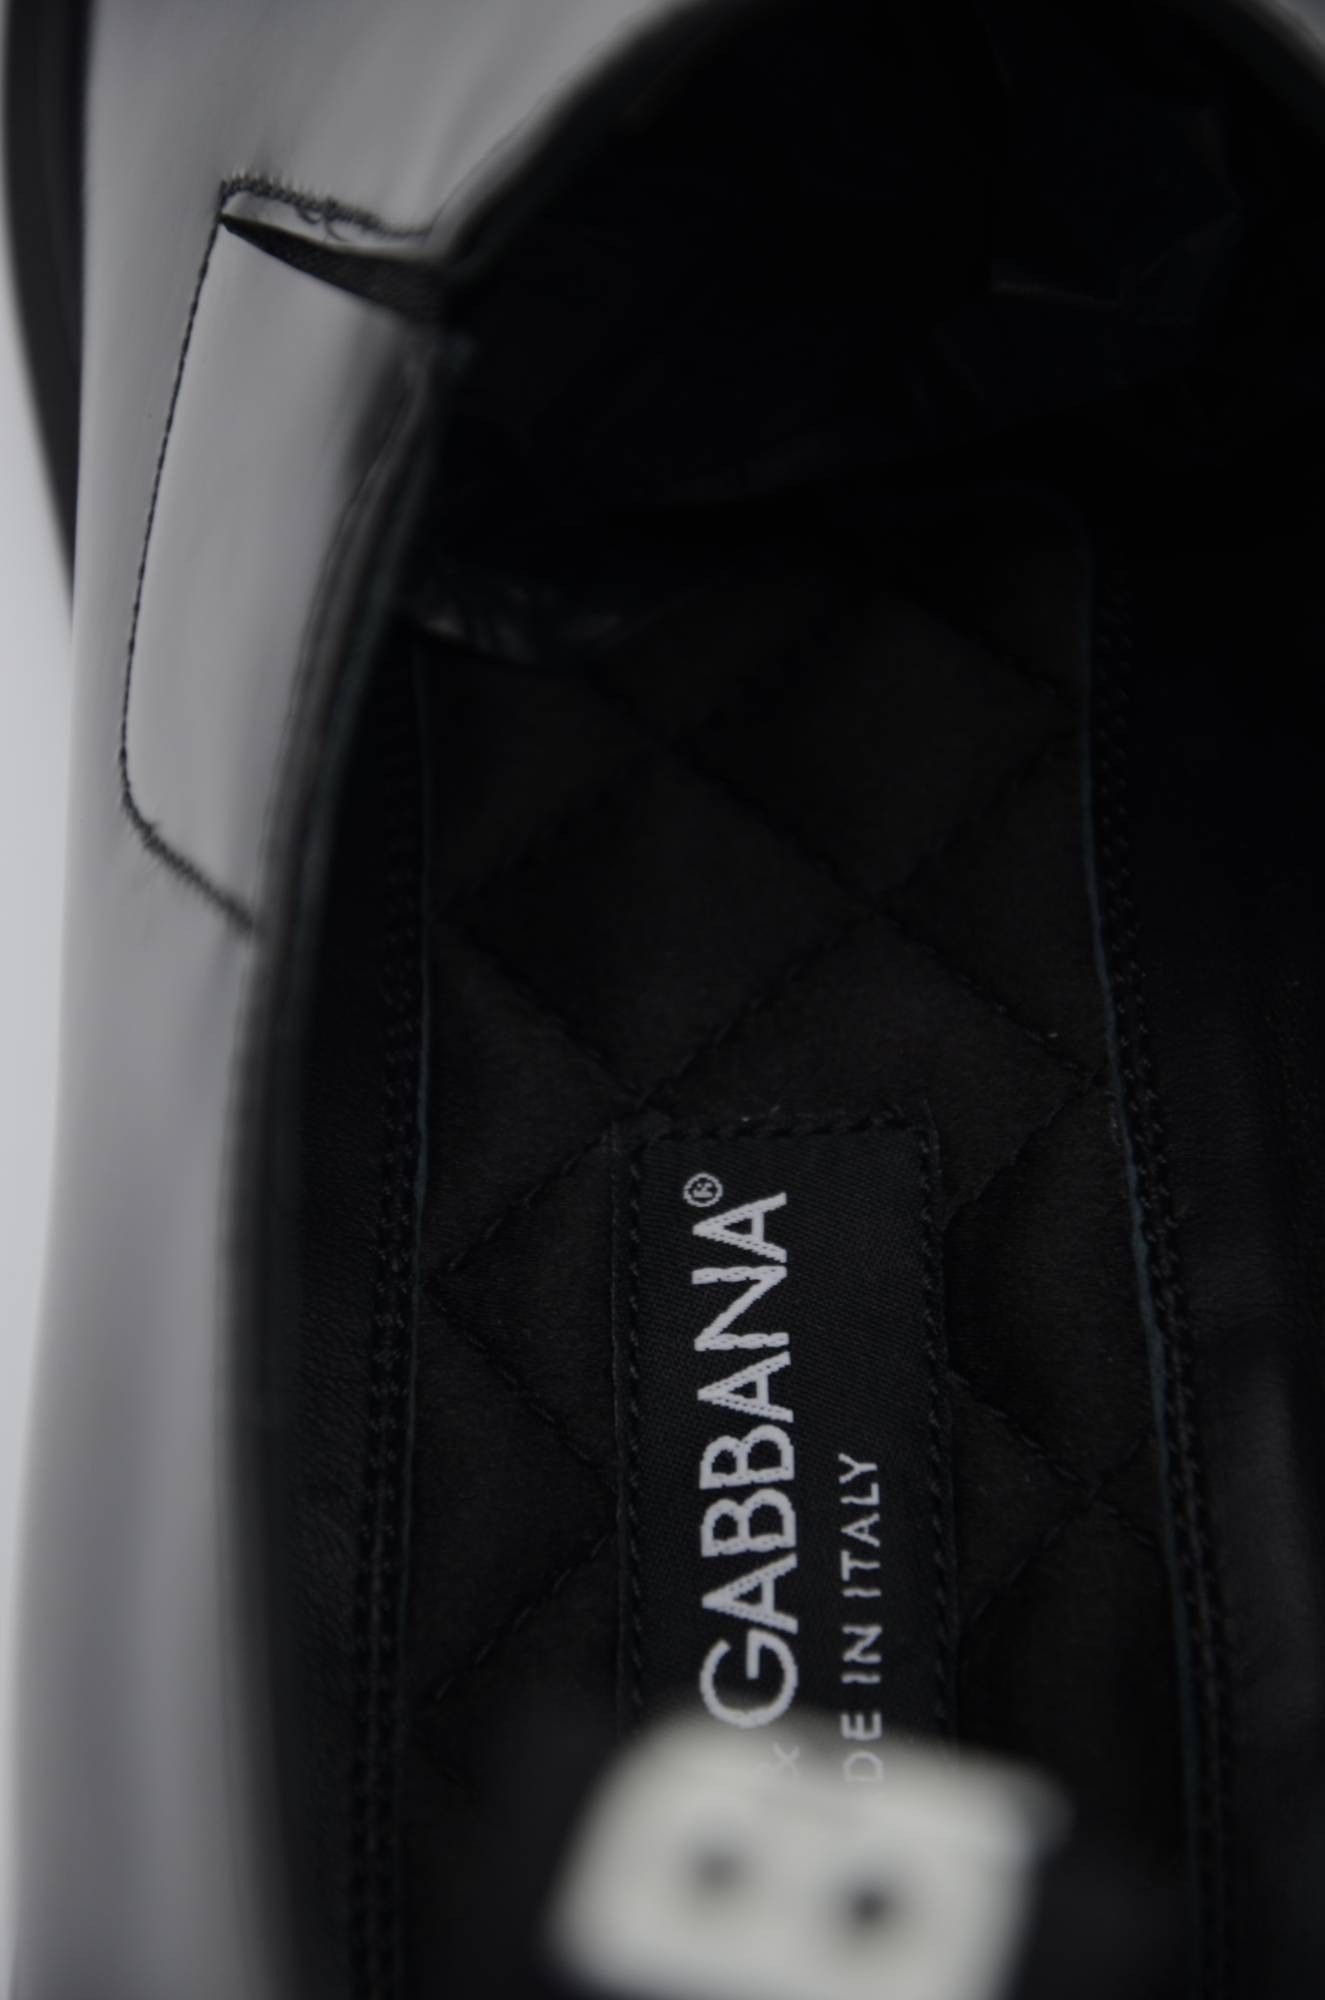 Dolce & Gabbana Men Leather Shoes